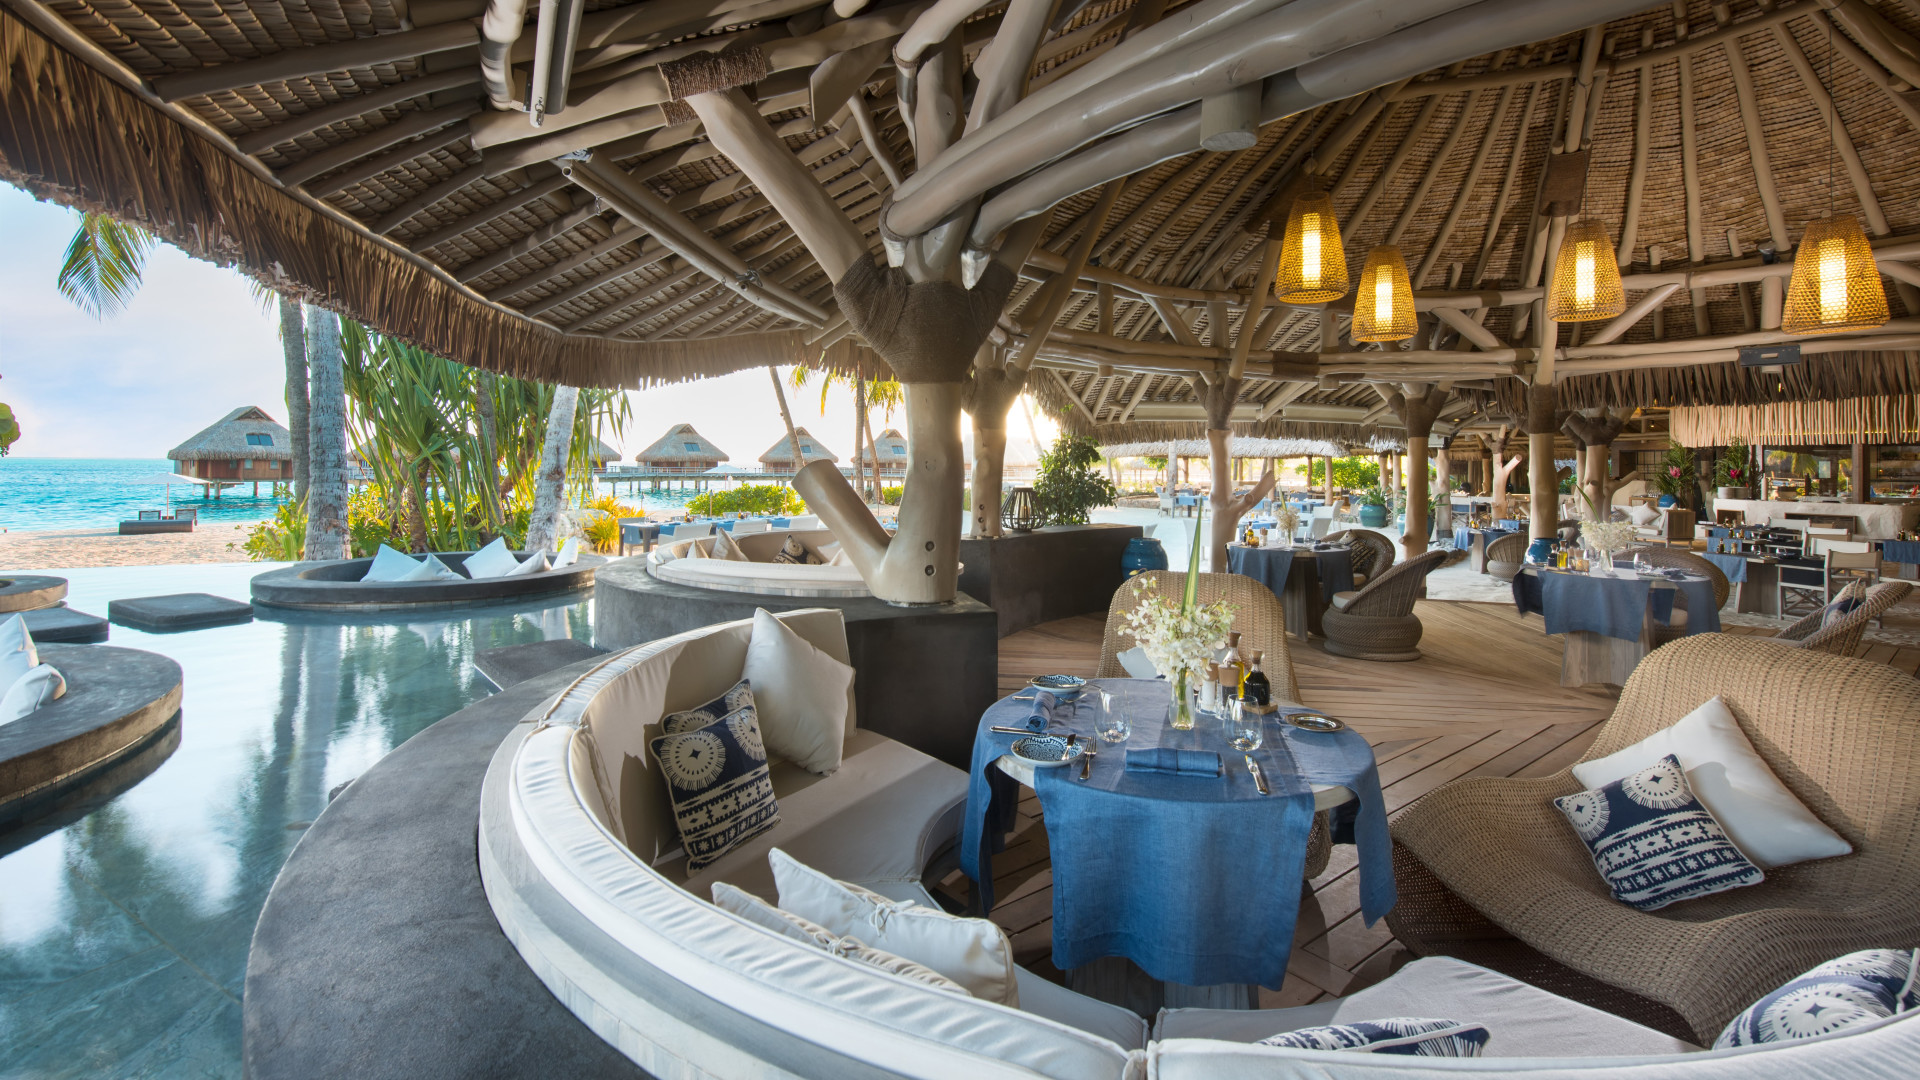 Restaurant with ocean views